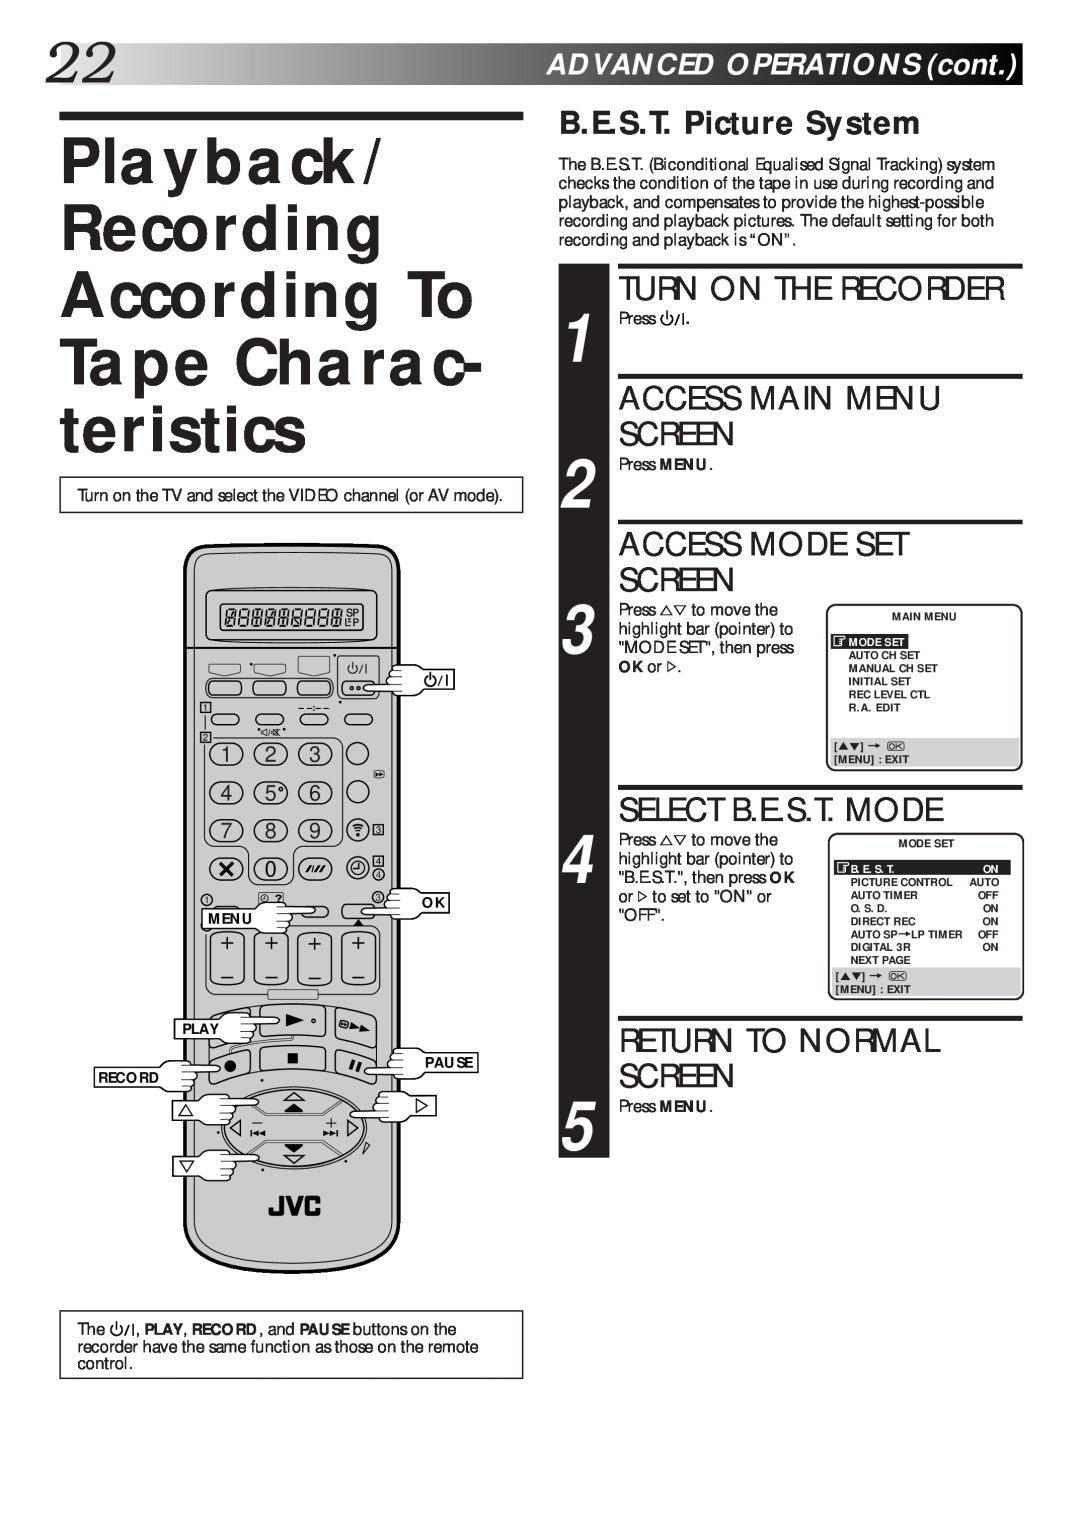 JVC HR-S9600EK Playback/ Recording According To Tape Charac- teristics, Access Main Menu, Access Mode Set, Screen 